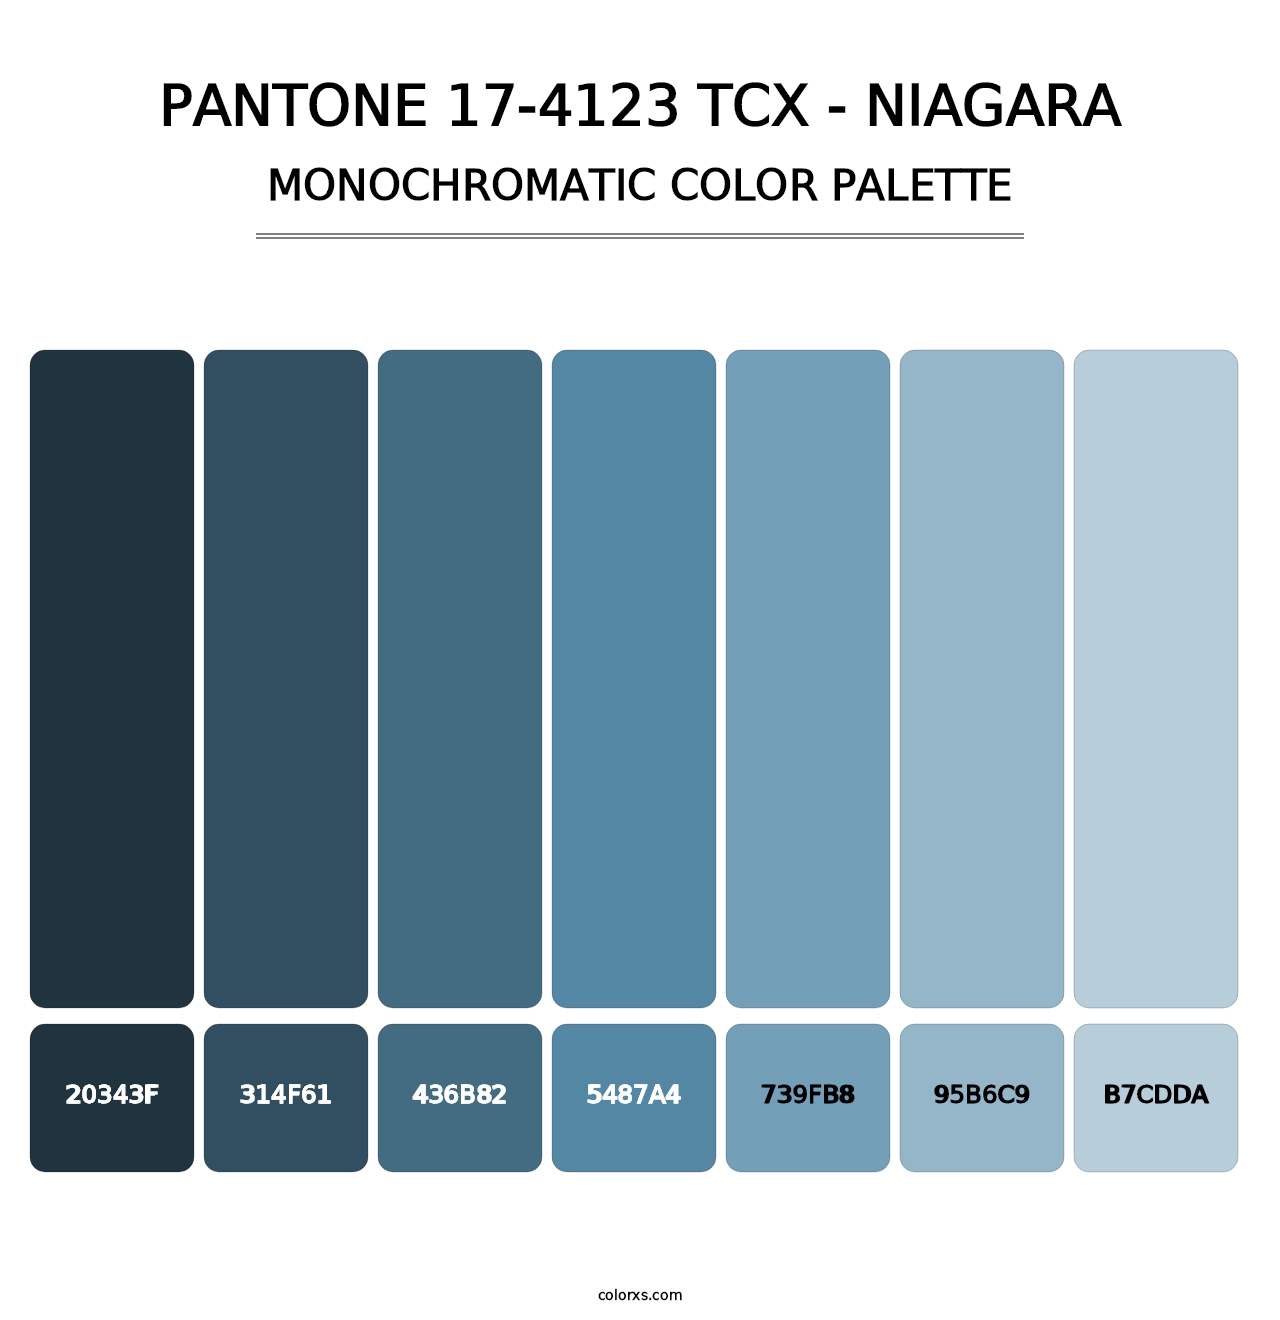 PANTONE 17-4123 TCX - Niagara - Monochromatic Color Palette